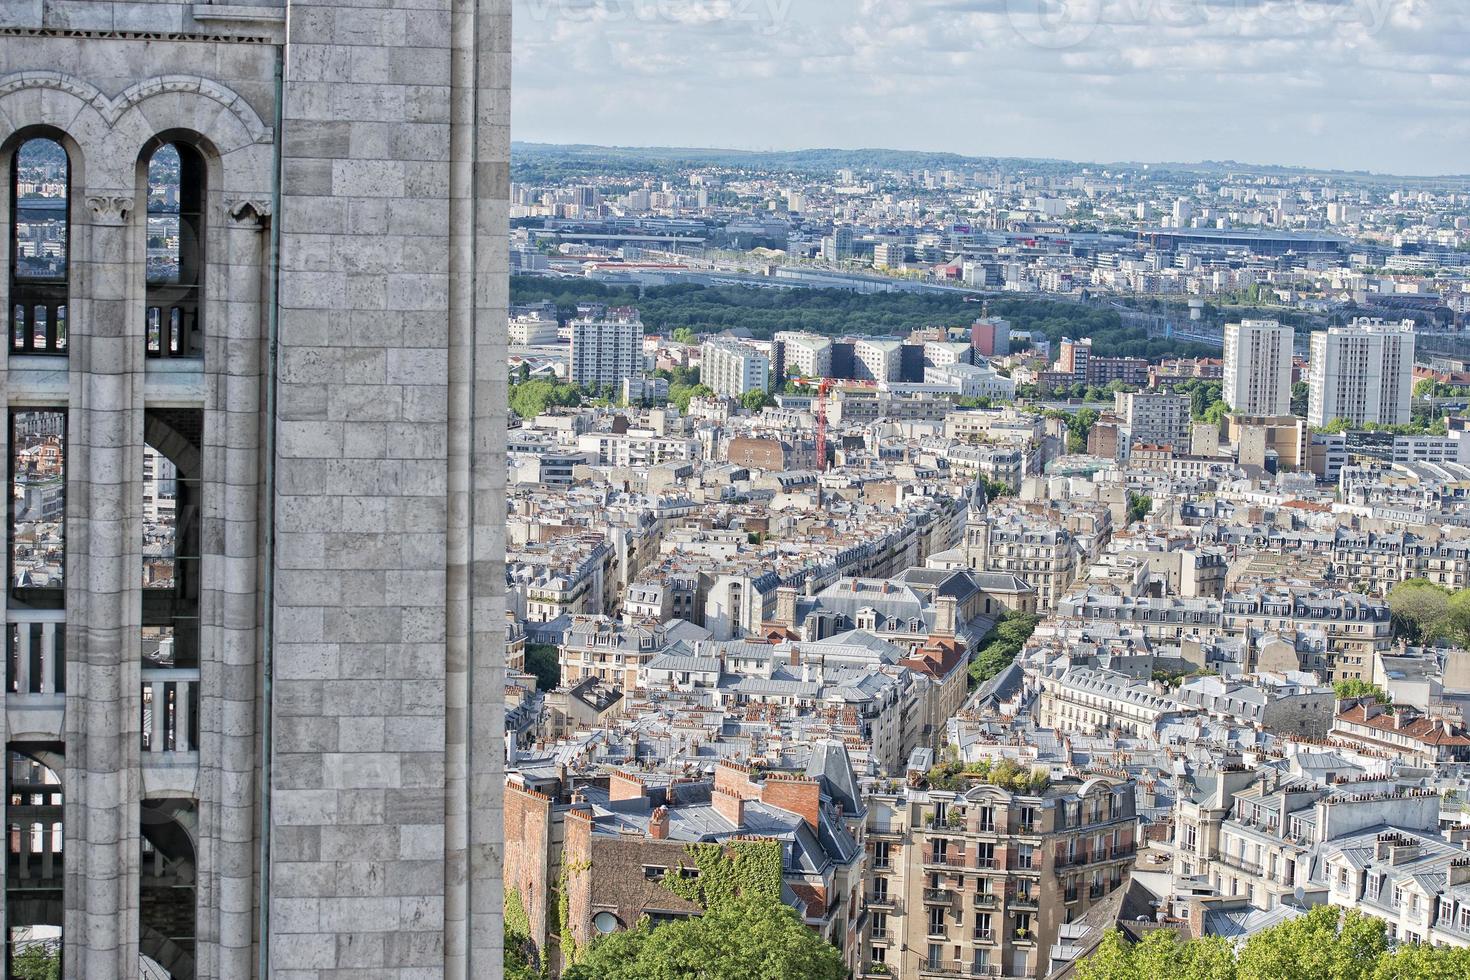 paris huge aerial view from montmatre photo